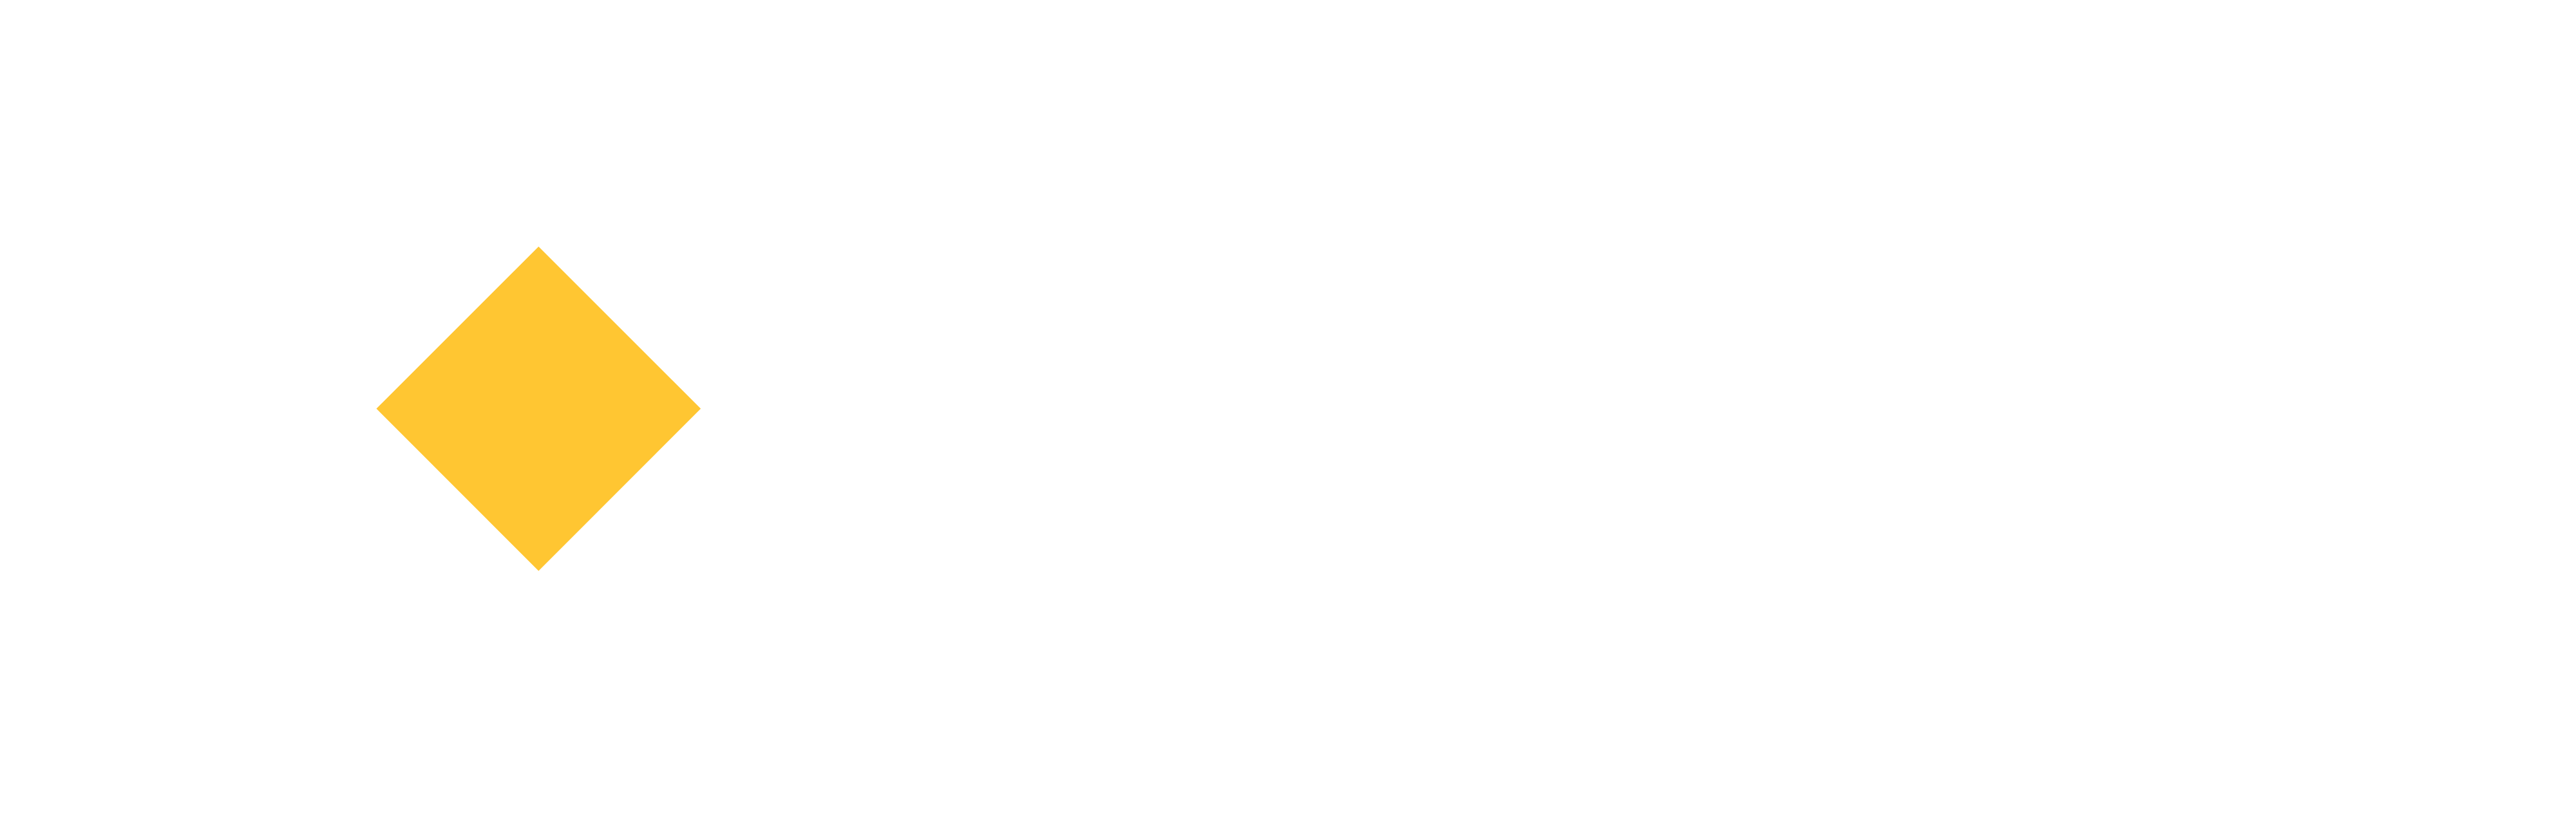 Blockvin